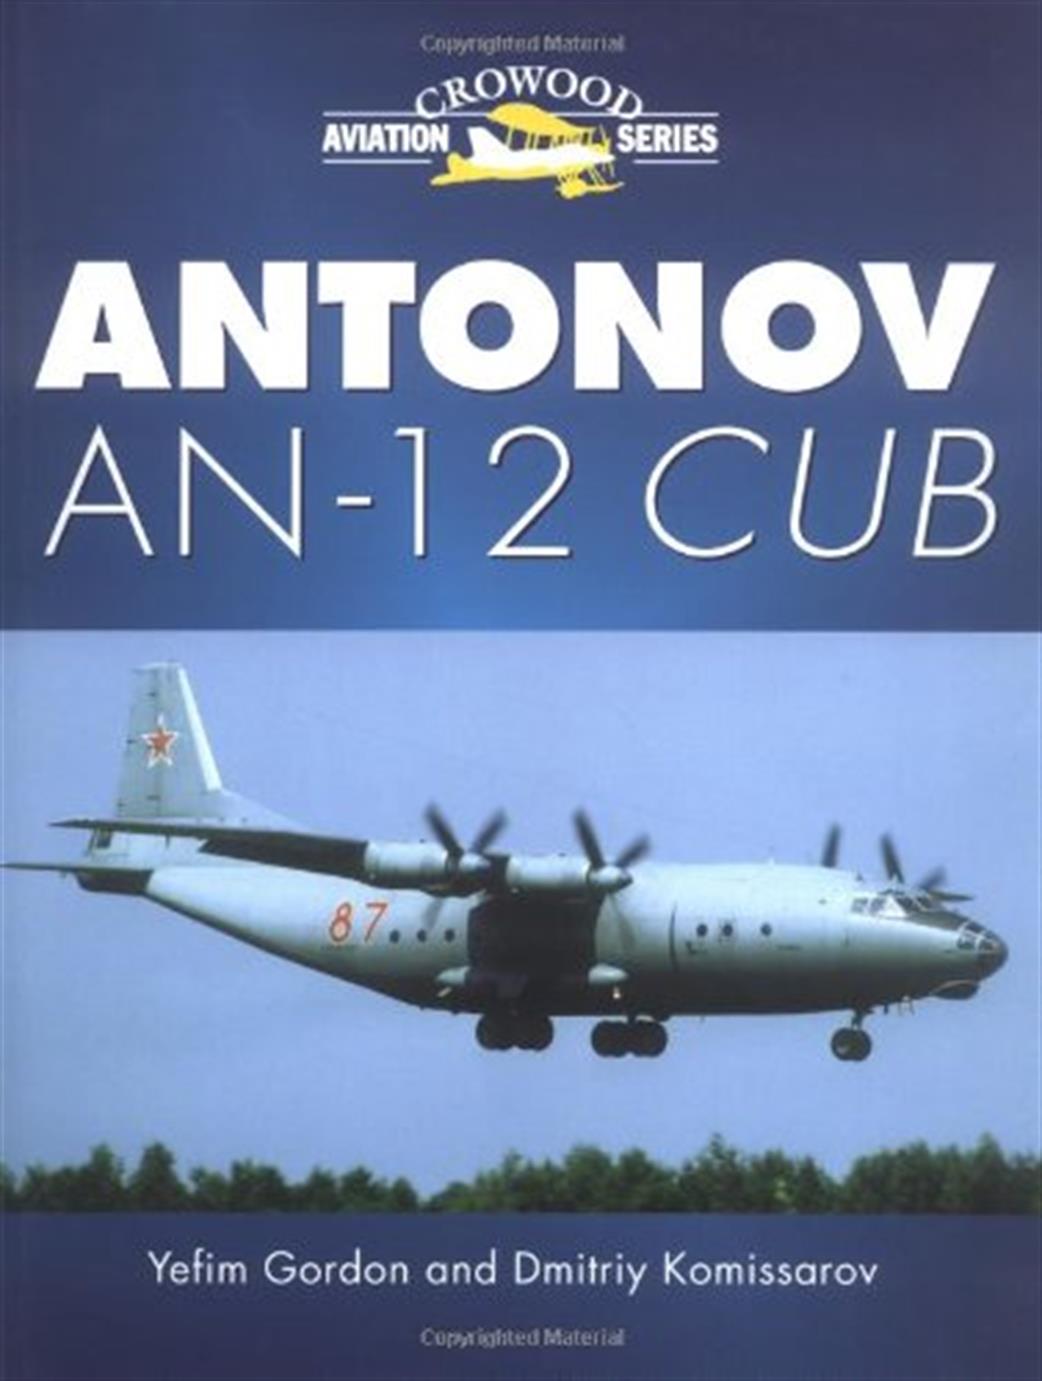 Crowood Press  18403735049781861269454 Crowood Aviation Series Antonov AN-12 Cub by Yefim Gordon & Dmitriy Komissarov